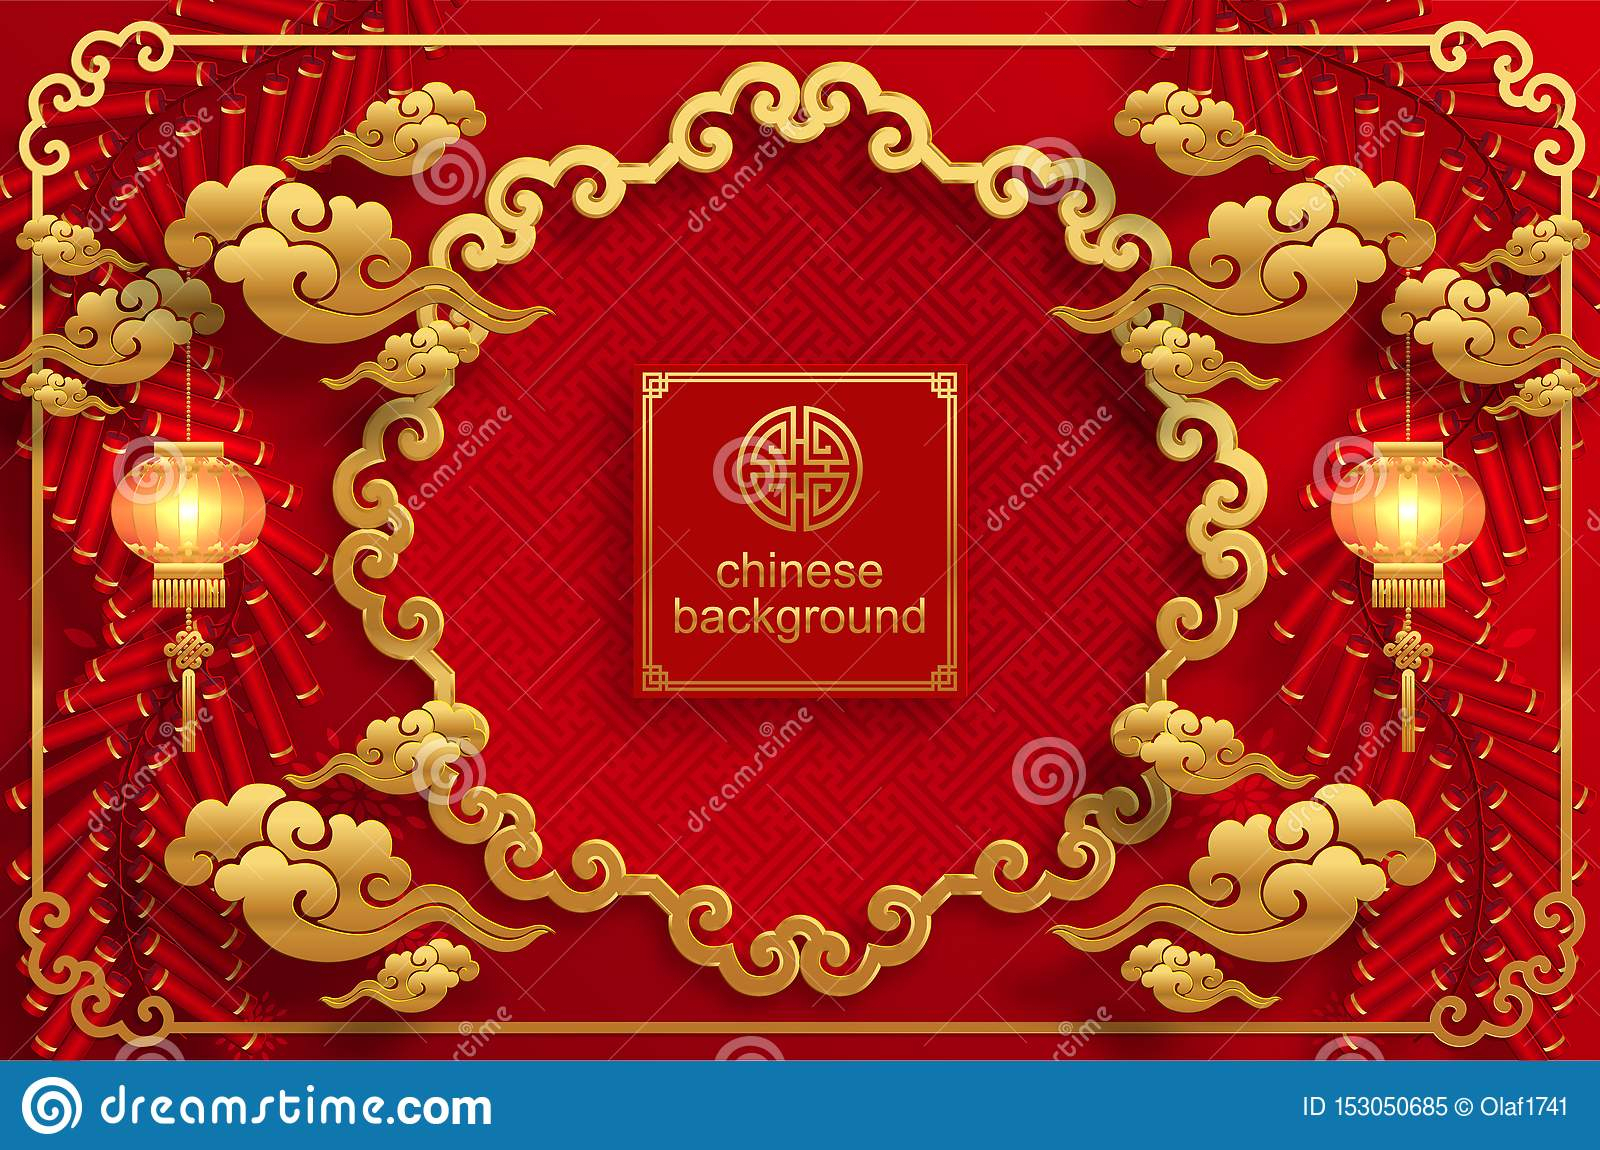 Chinese Oriental Wedding Invitation Card Templates . Stock dedans Invitation Orientale